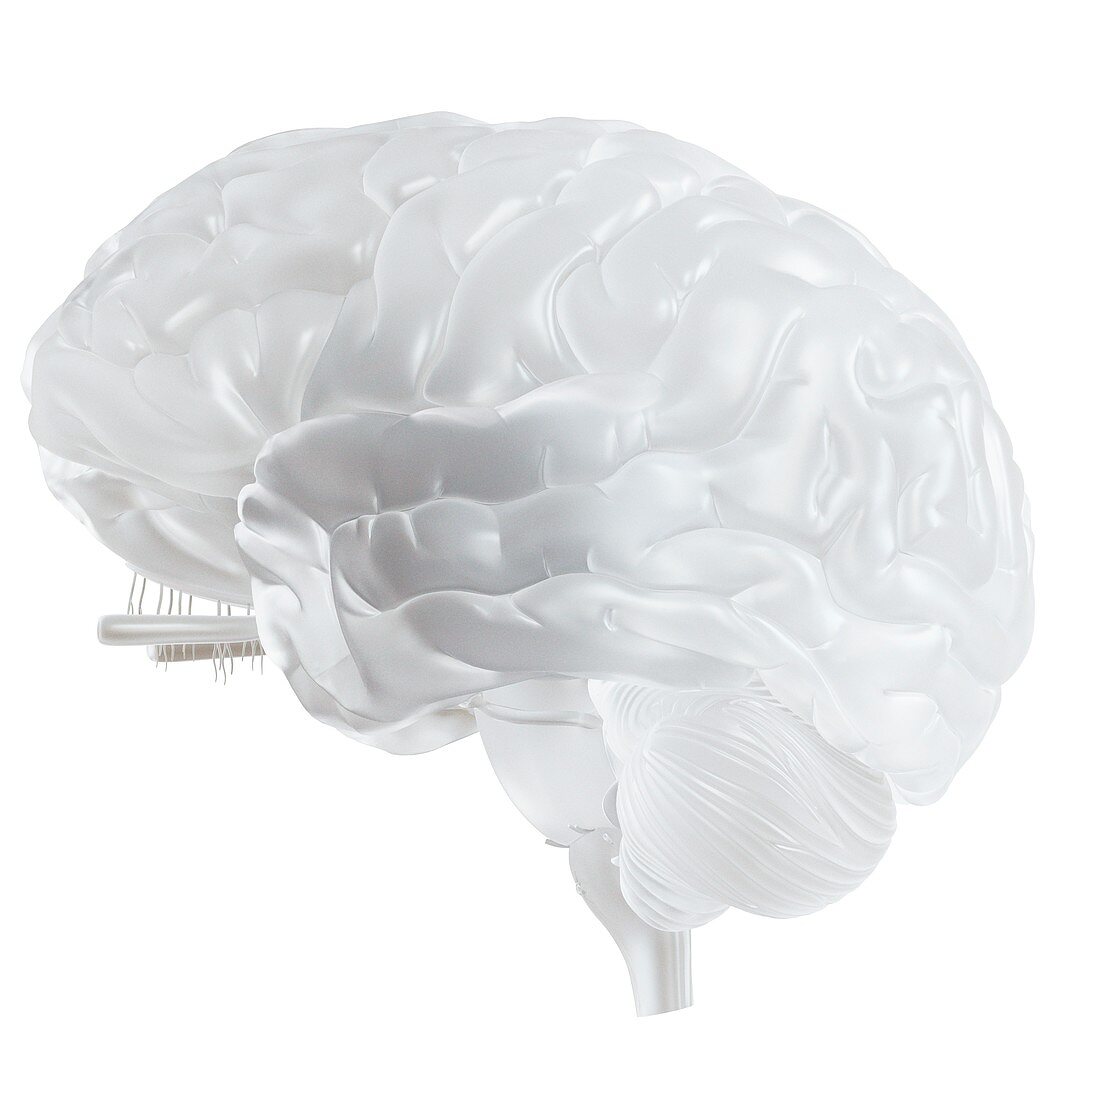 Illustration of a glass brain